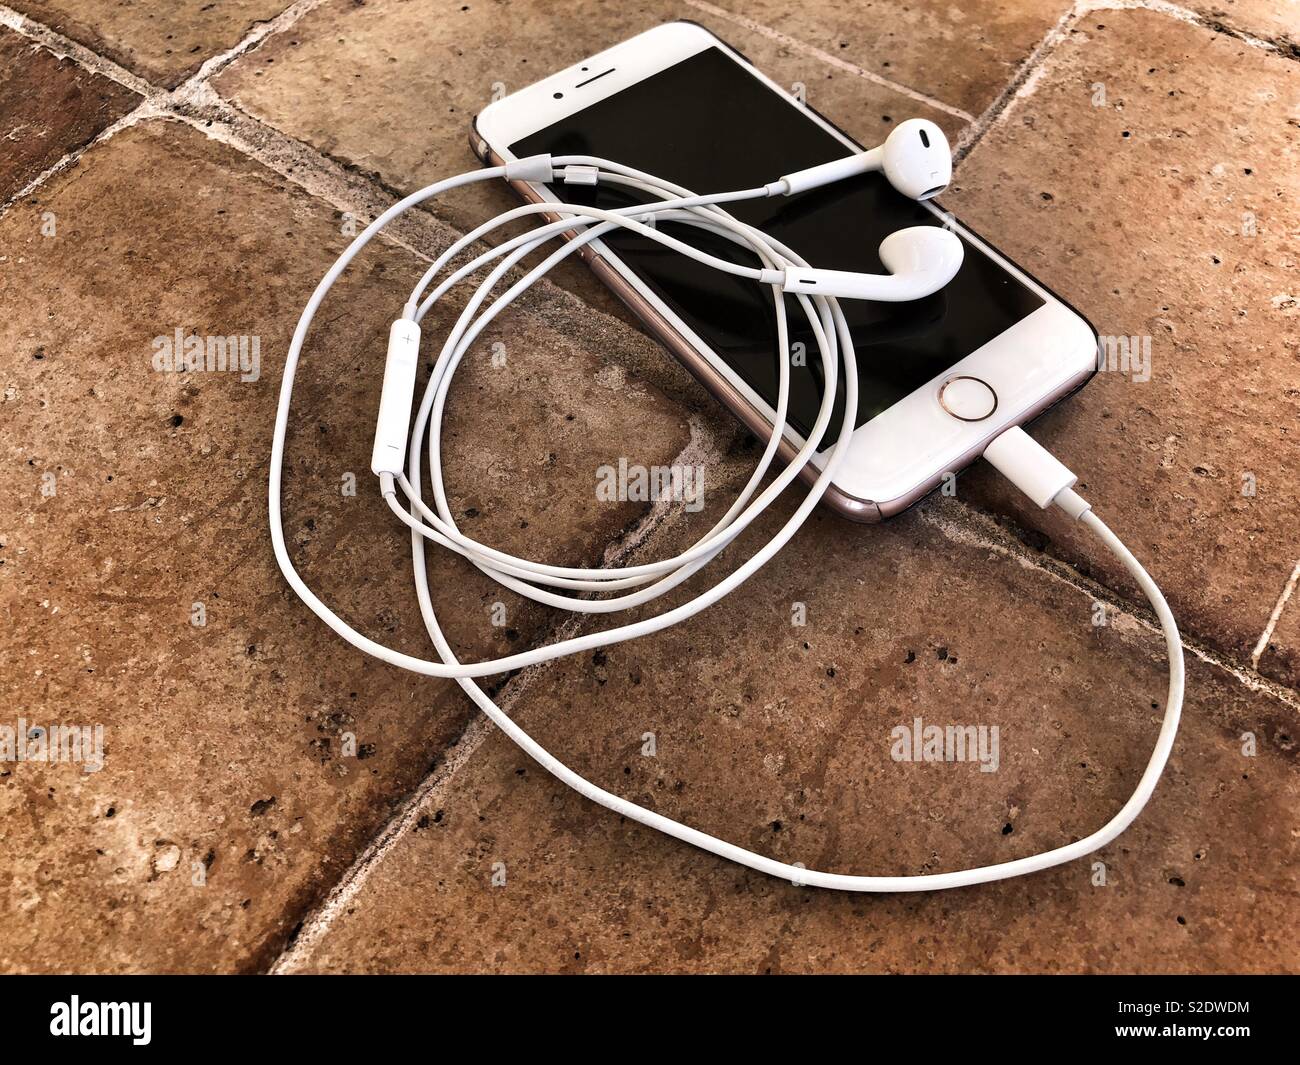 Smartphone and earphones on terracotta tiled floor Stock Photo